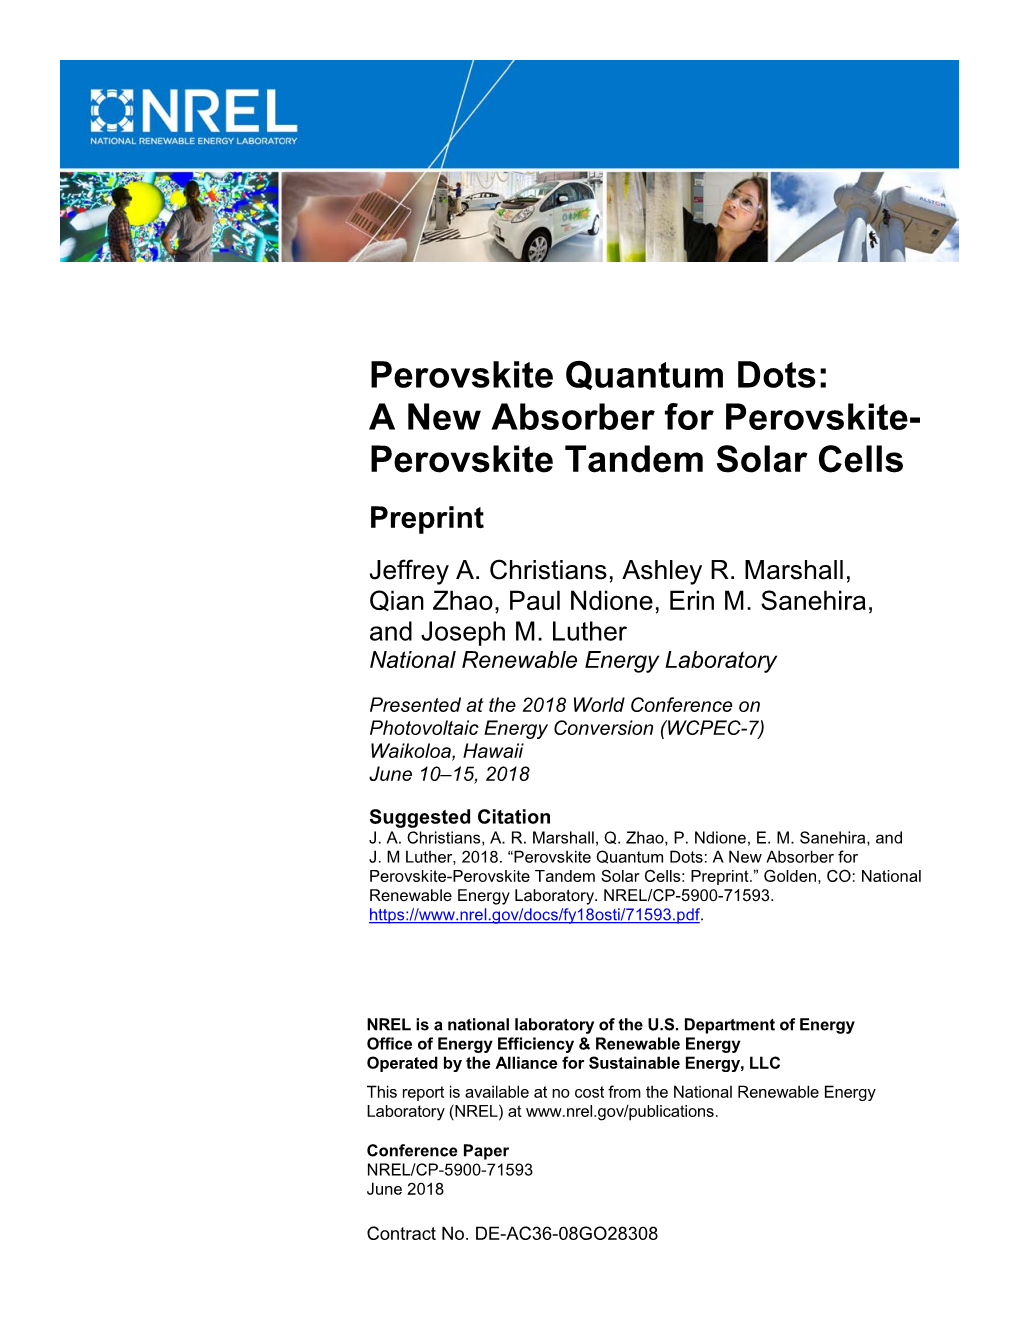 Perovskite Tandem Solar Cells Preprint Jeffrey A